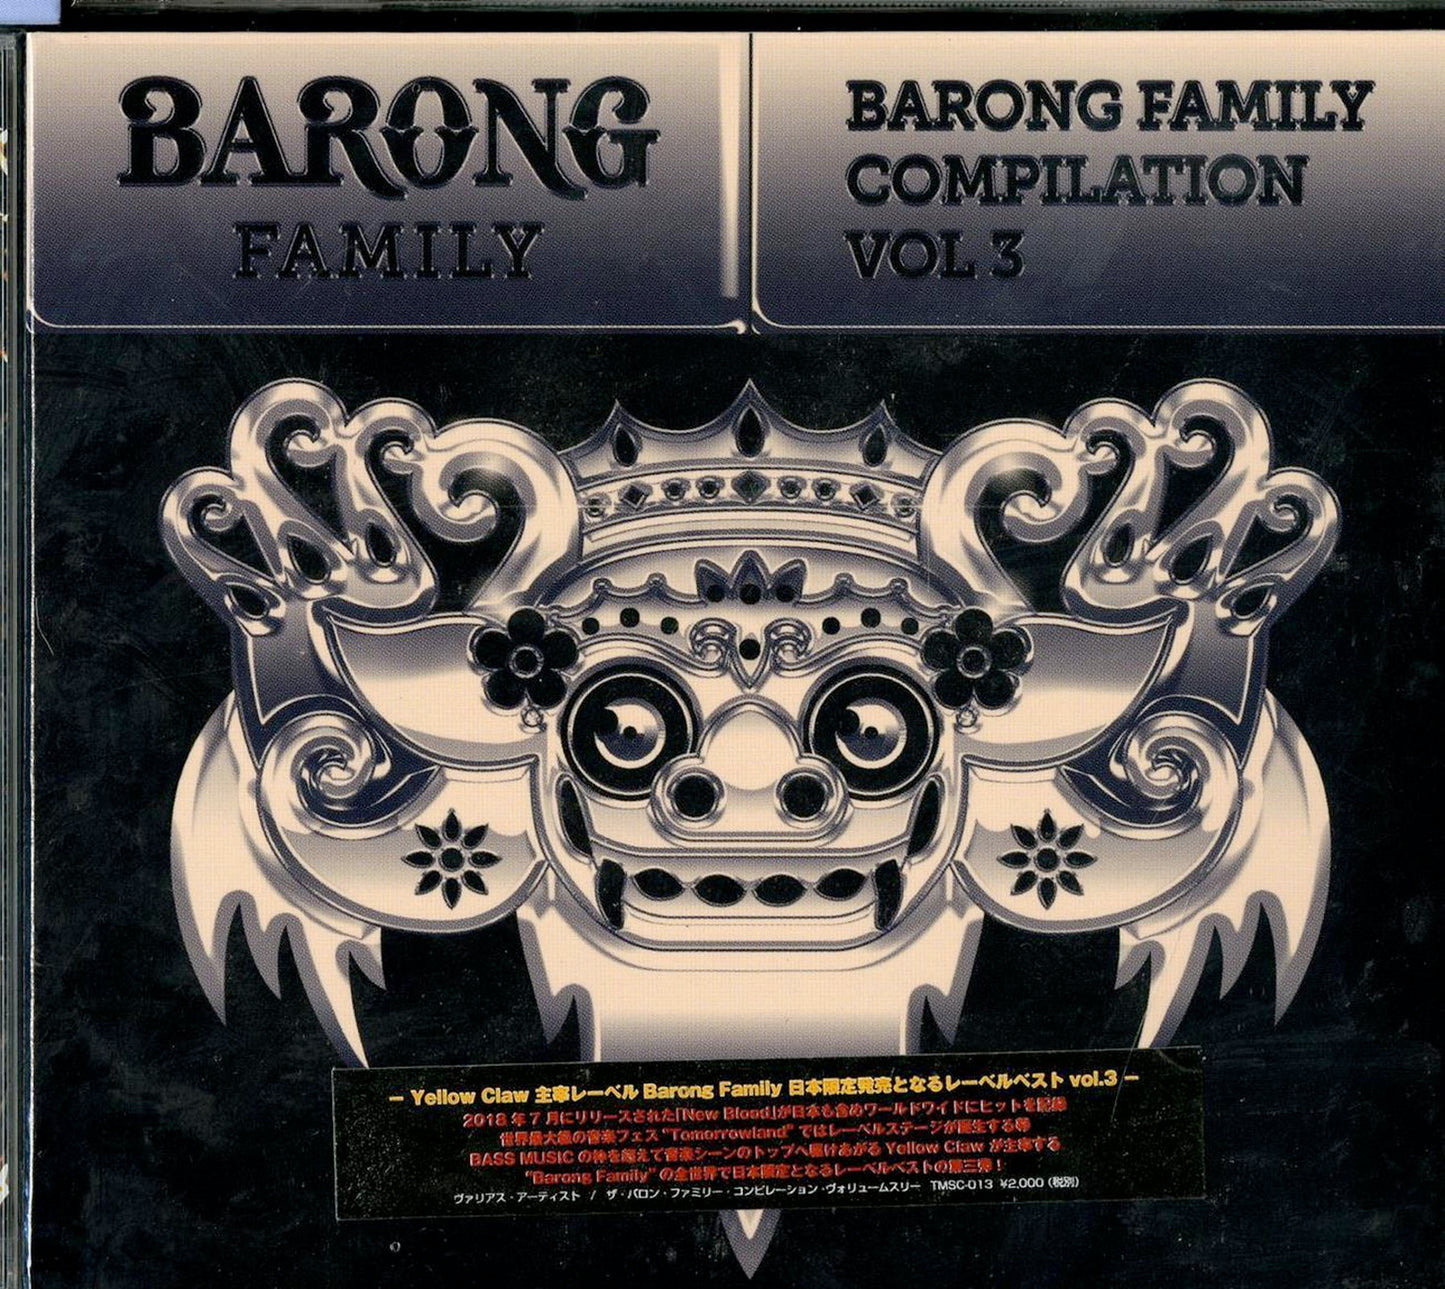 V.A. - The Barong Family Compilation Vol.3 - Japan CD